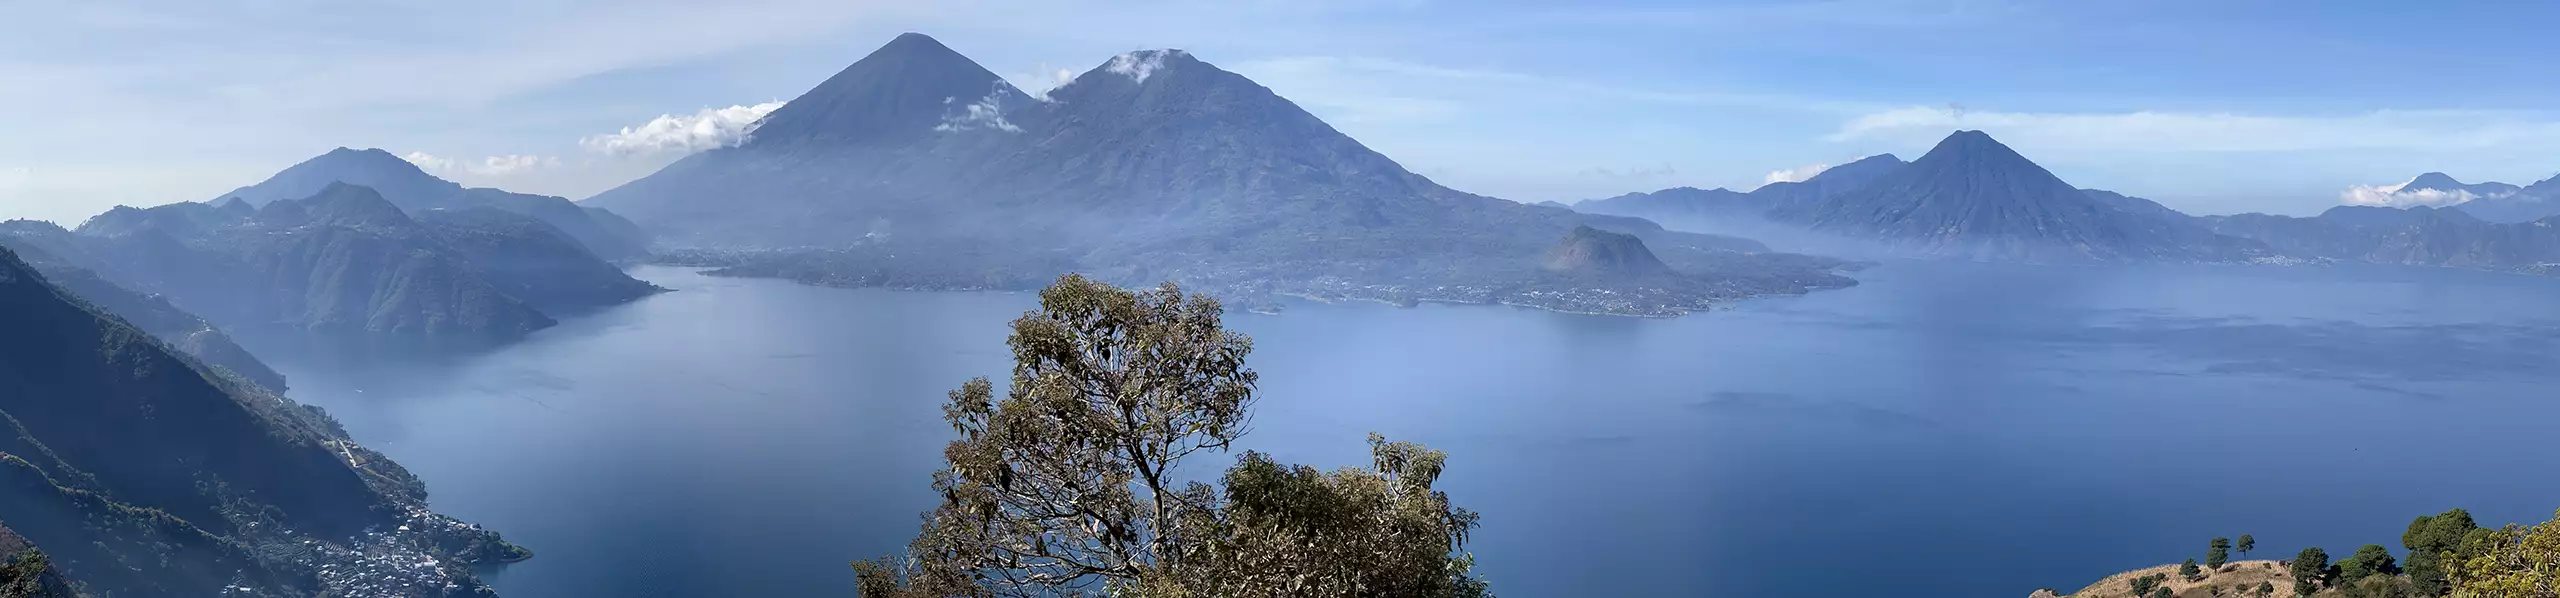 A view over Lake Atitlan, Guatemala